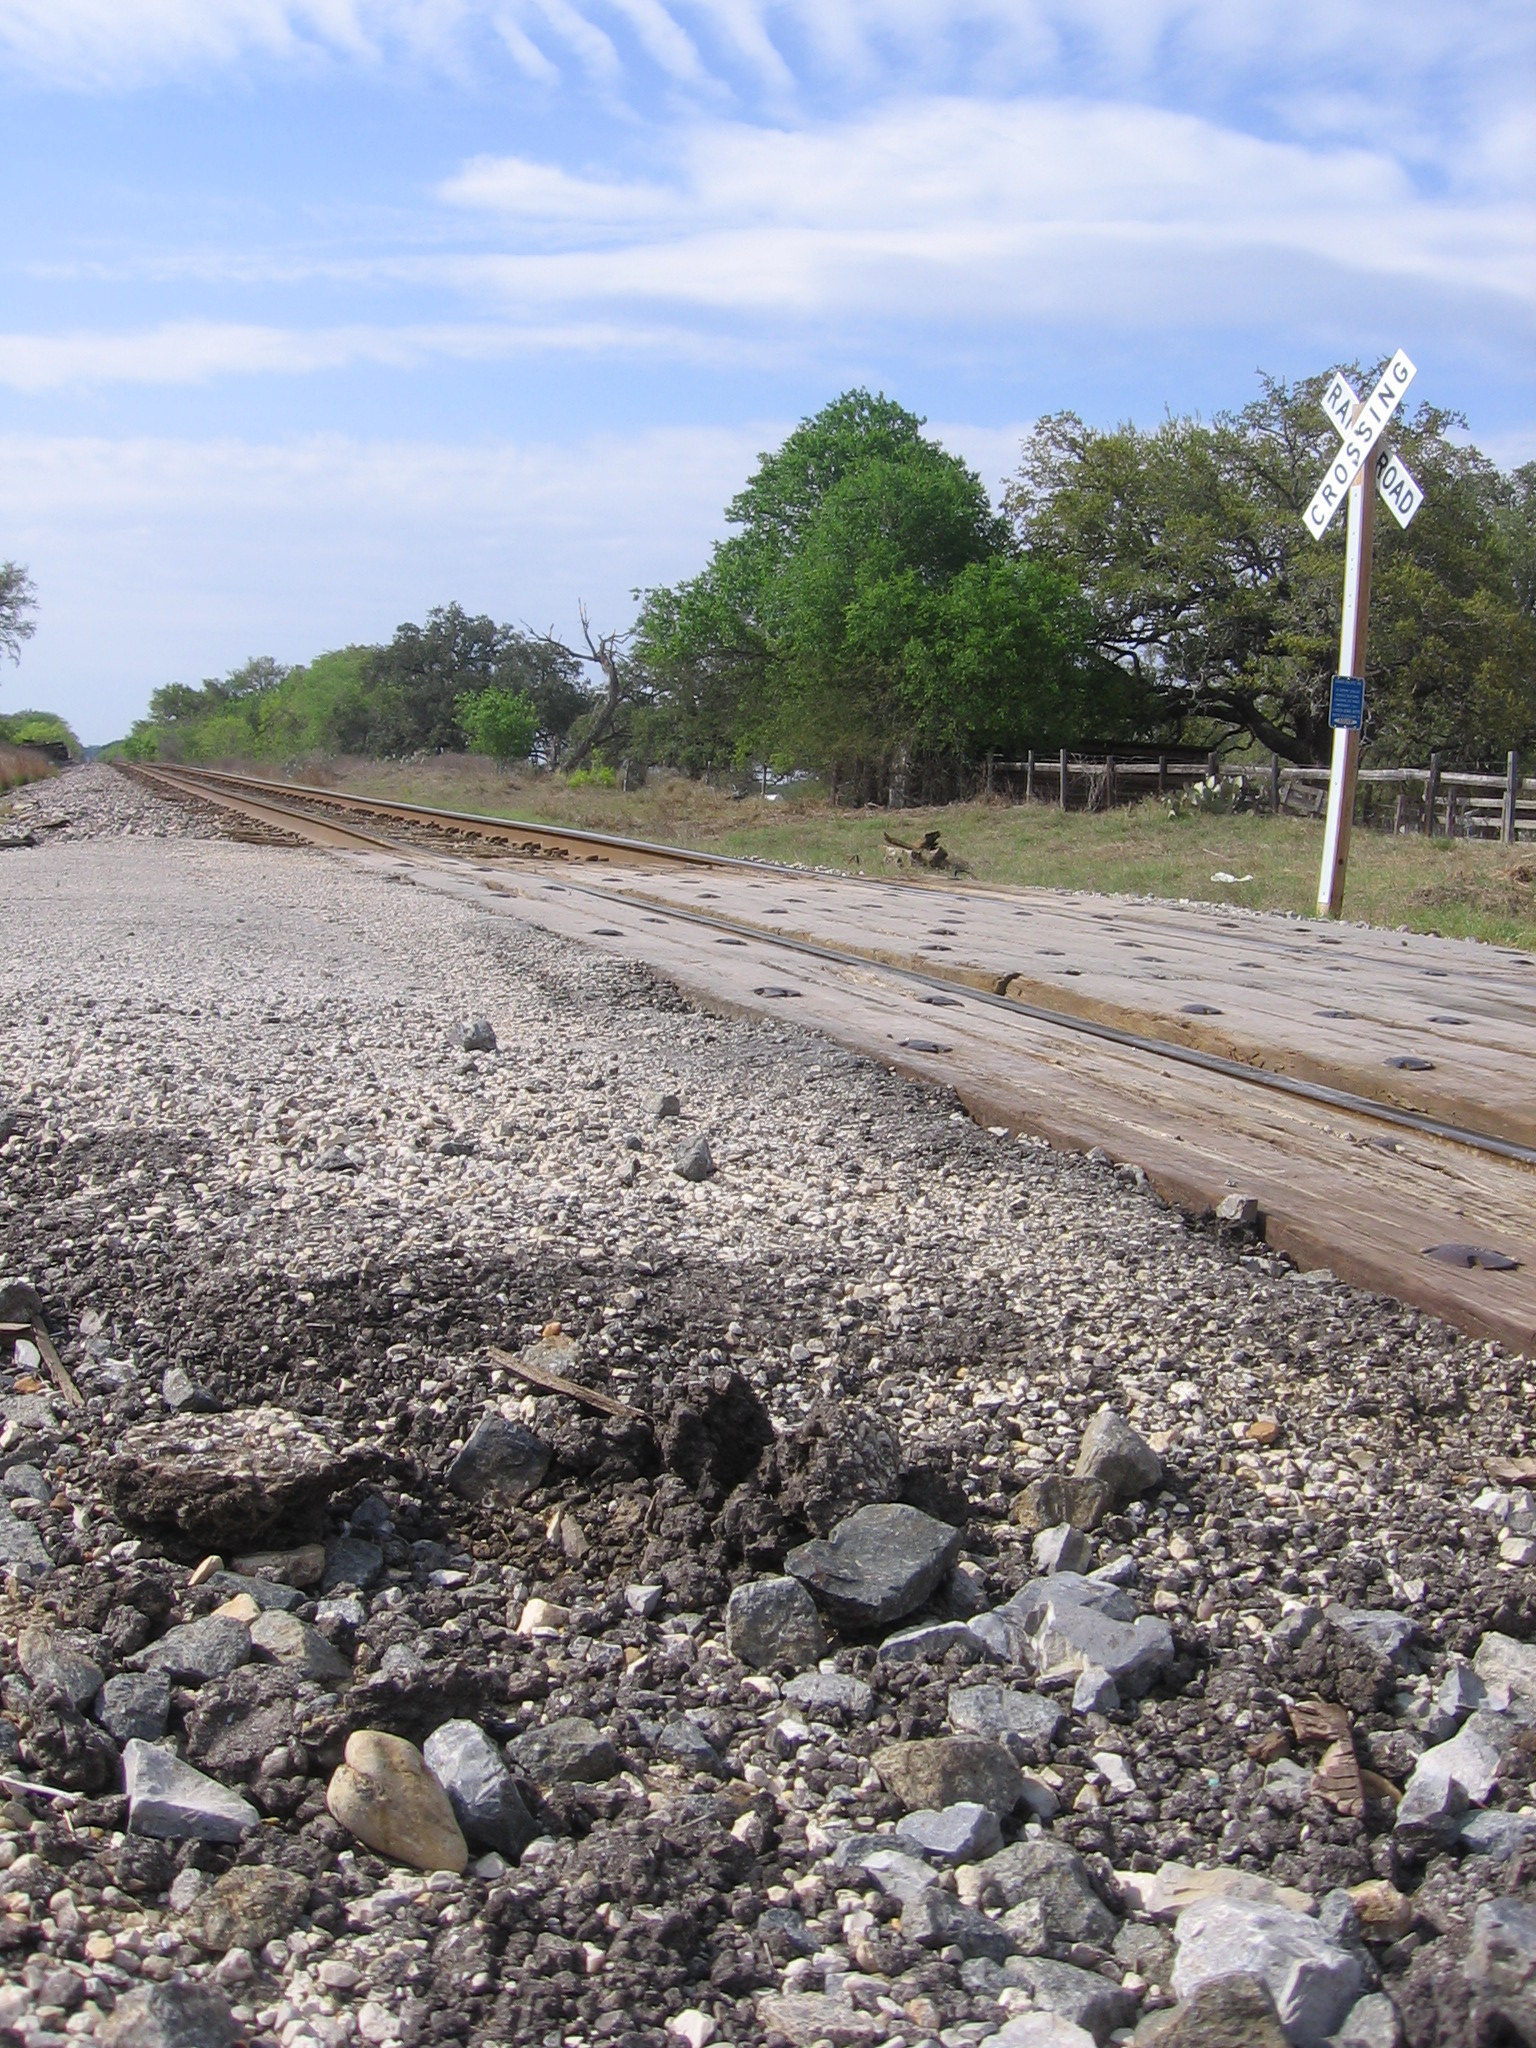 Railroad tracks in Coughran Texas